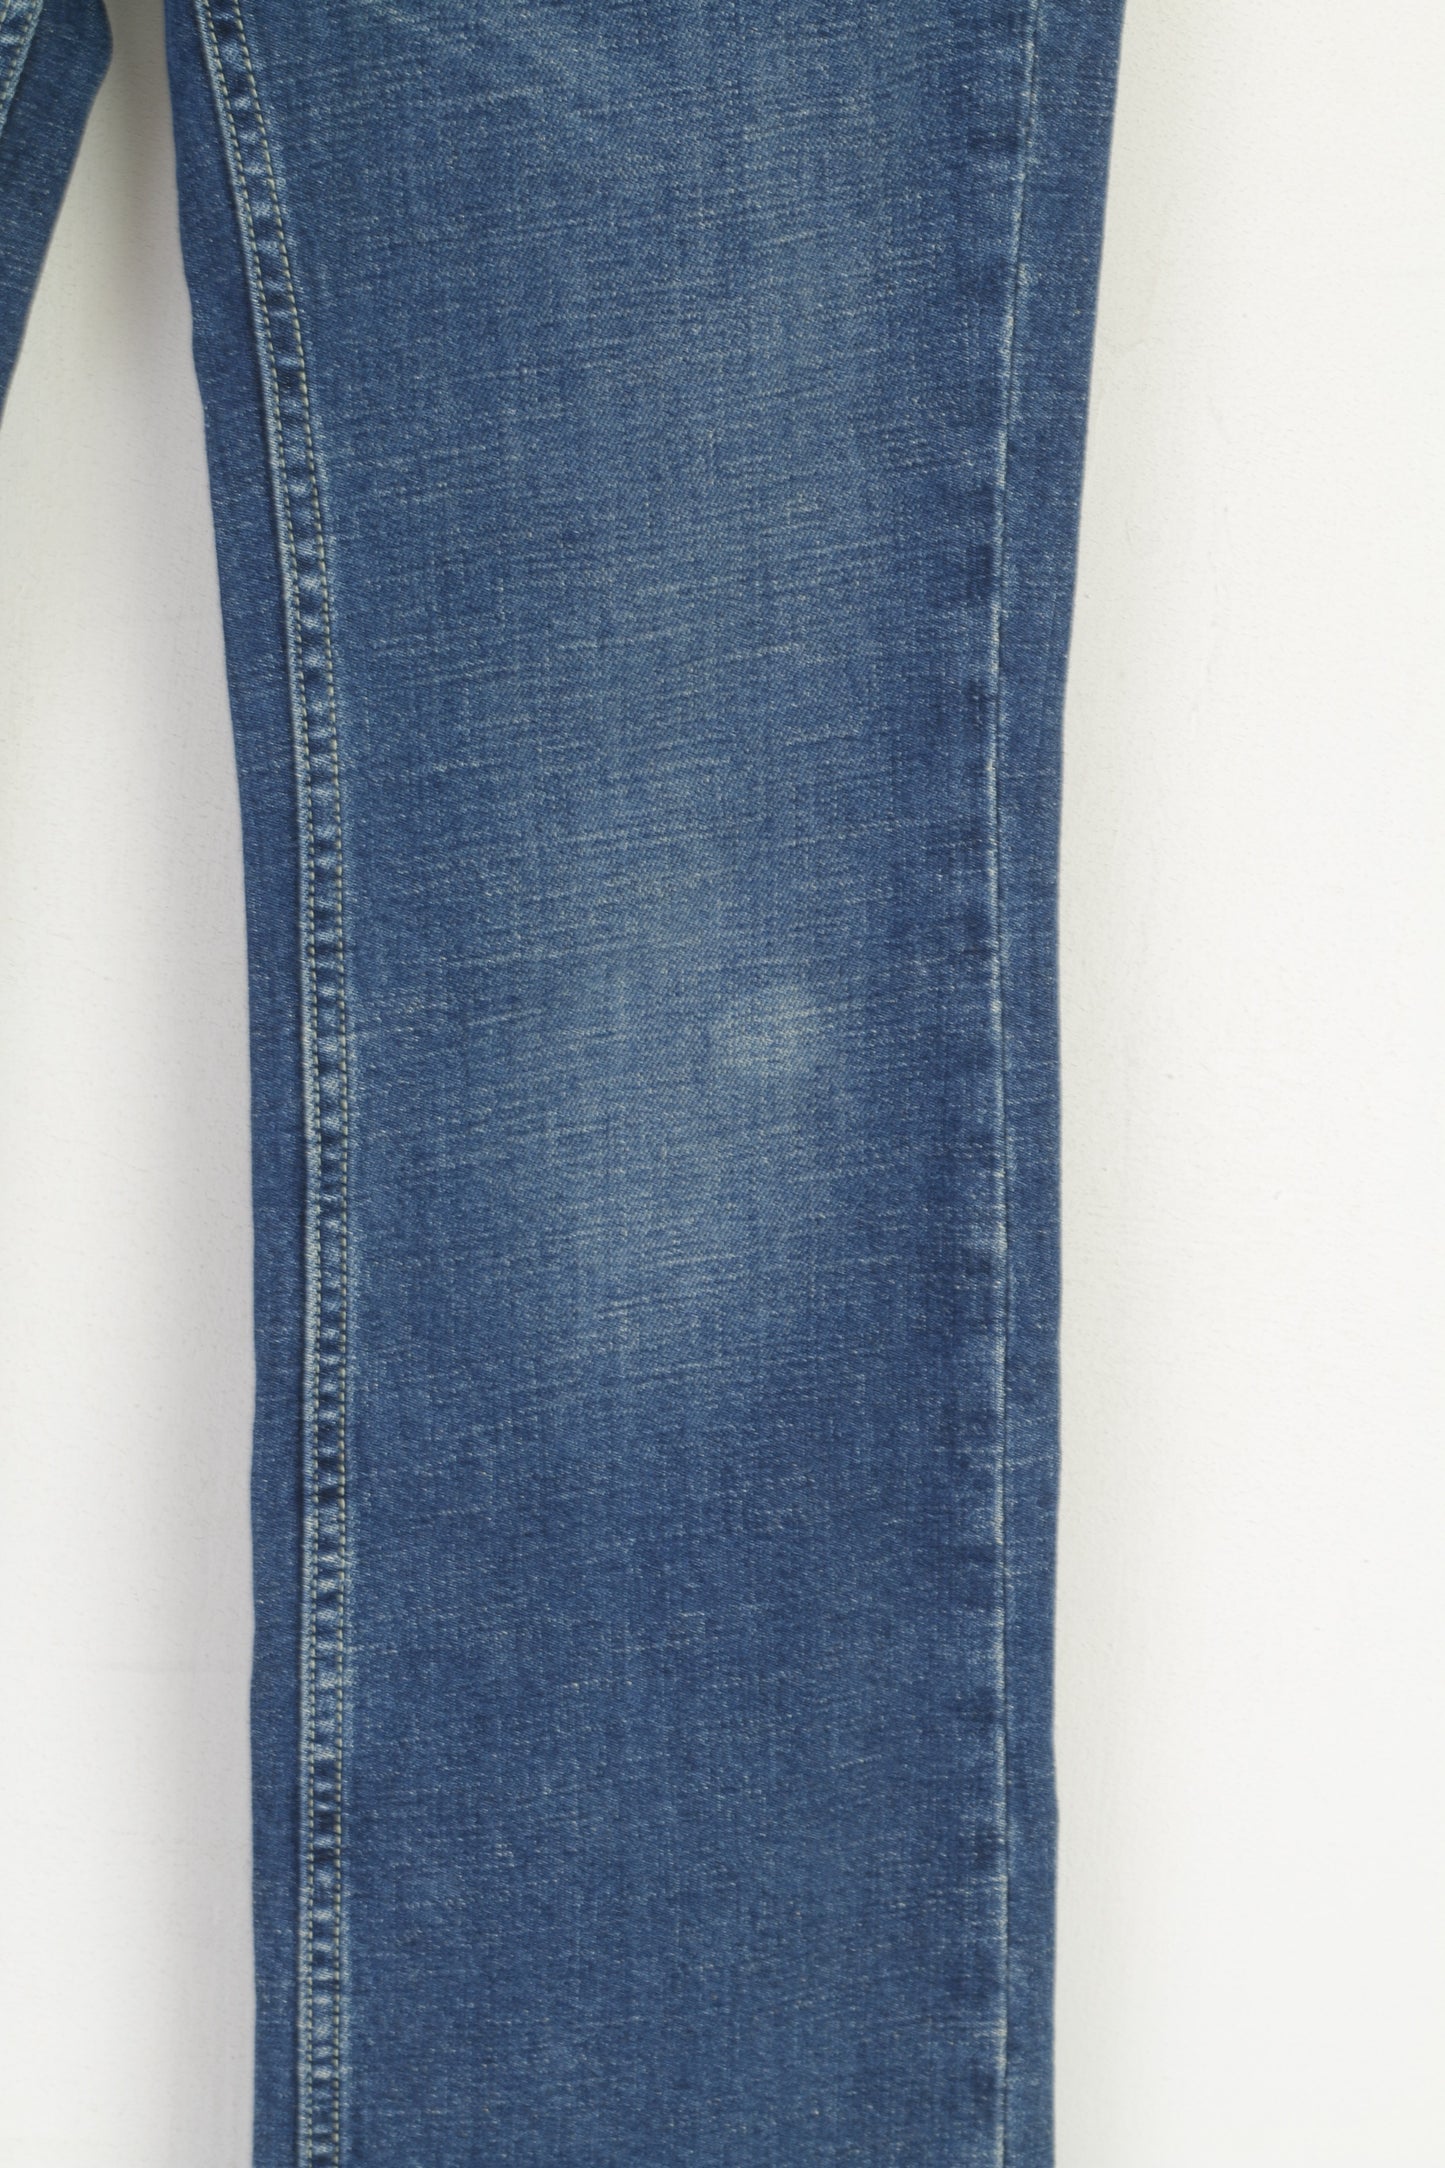 Lee Women 29 Jeans Trousers Navy Denim Cotton Jinx Vintage Bootcut Pants